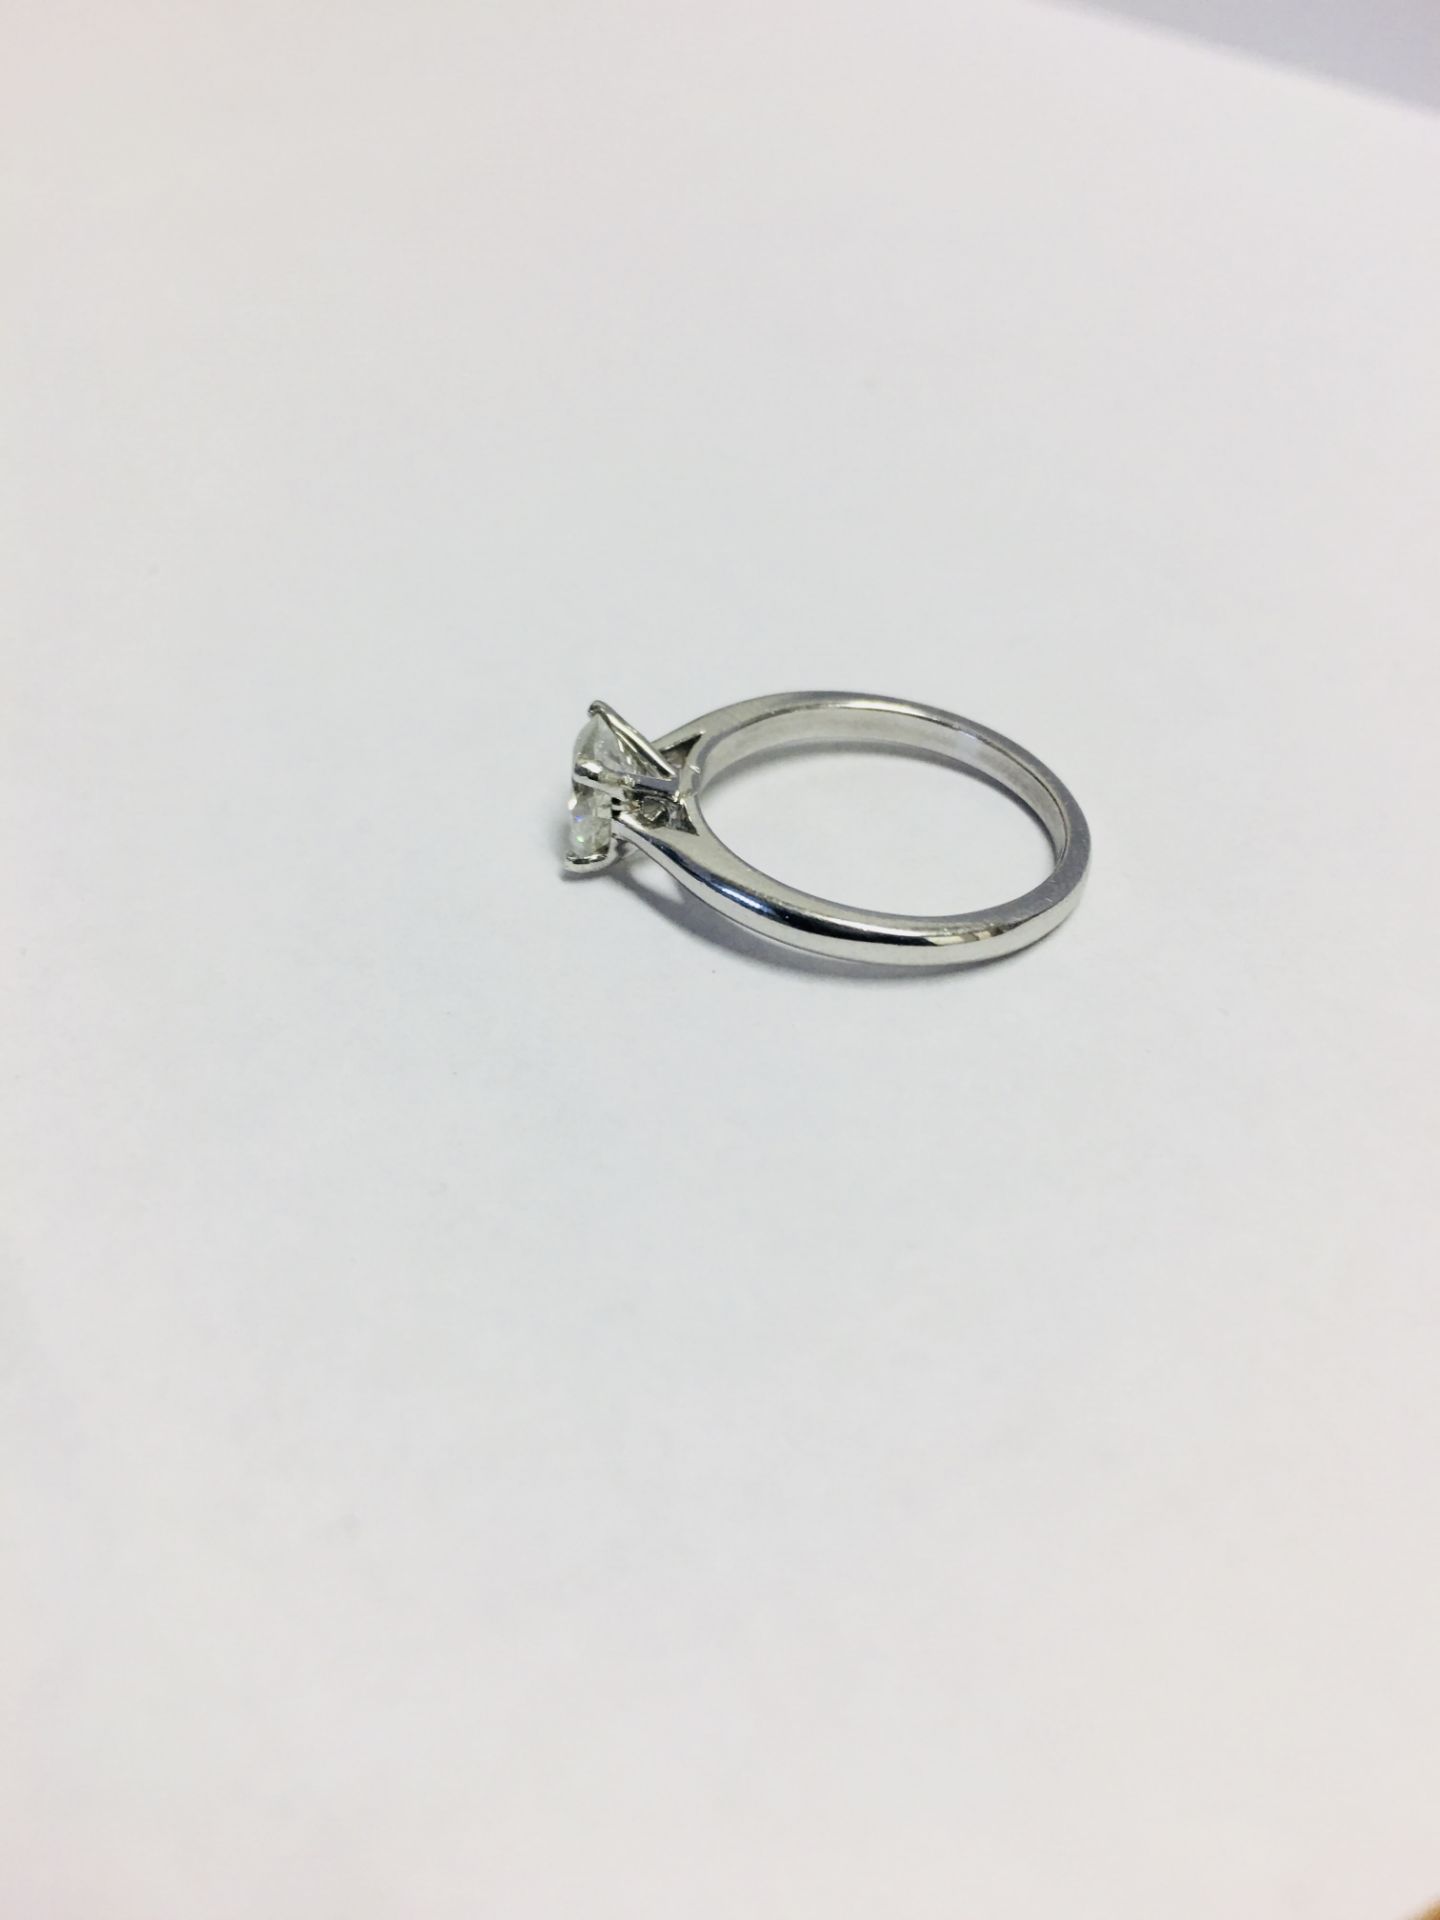 1Ct Brilliant Cut Diamond Solitaire Ring, - Image 2 of 5